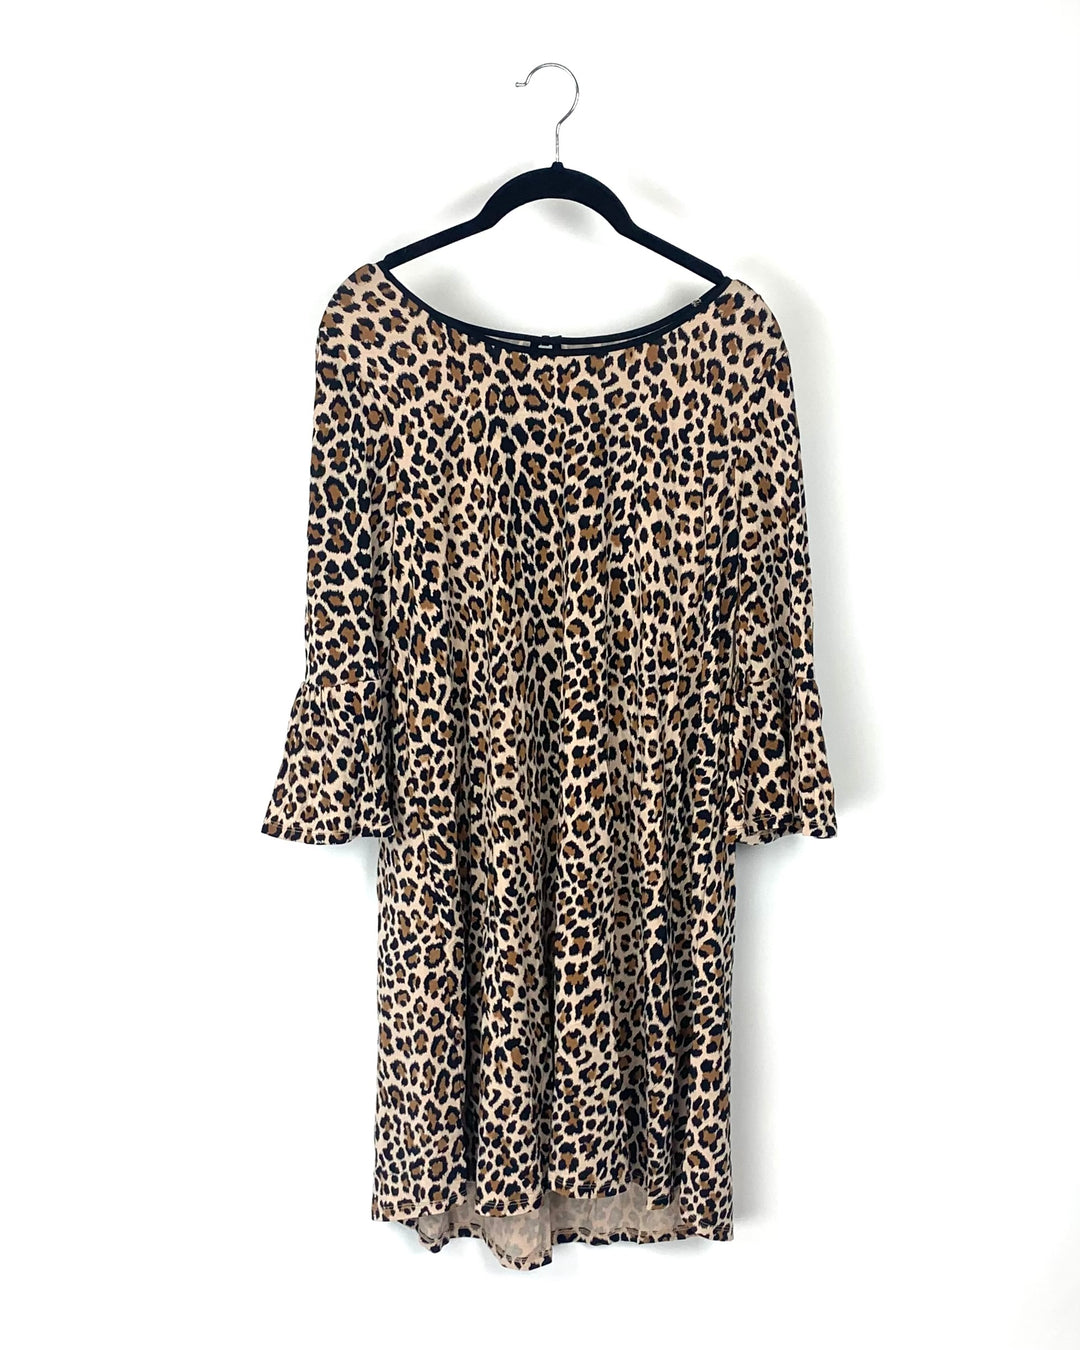 Cheetah Nightgown - Small